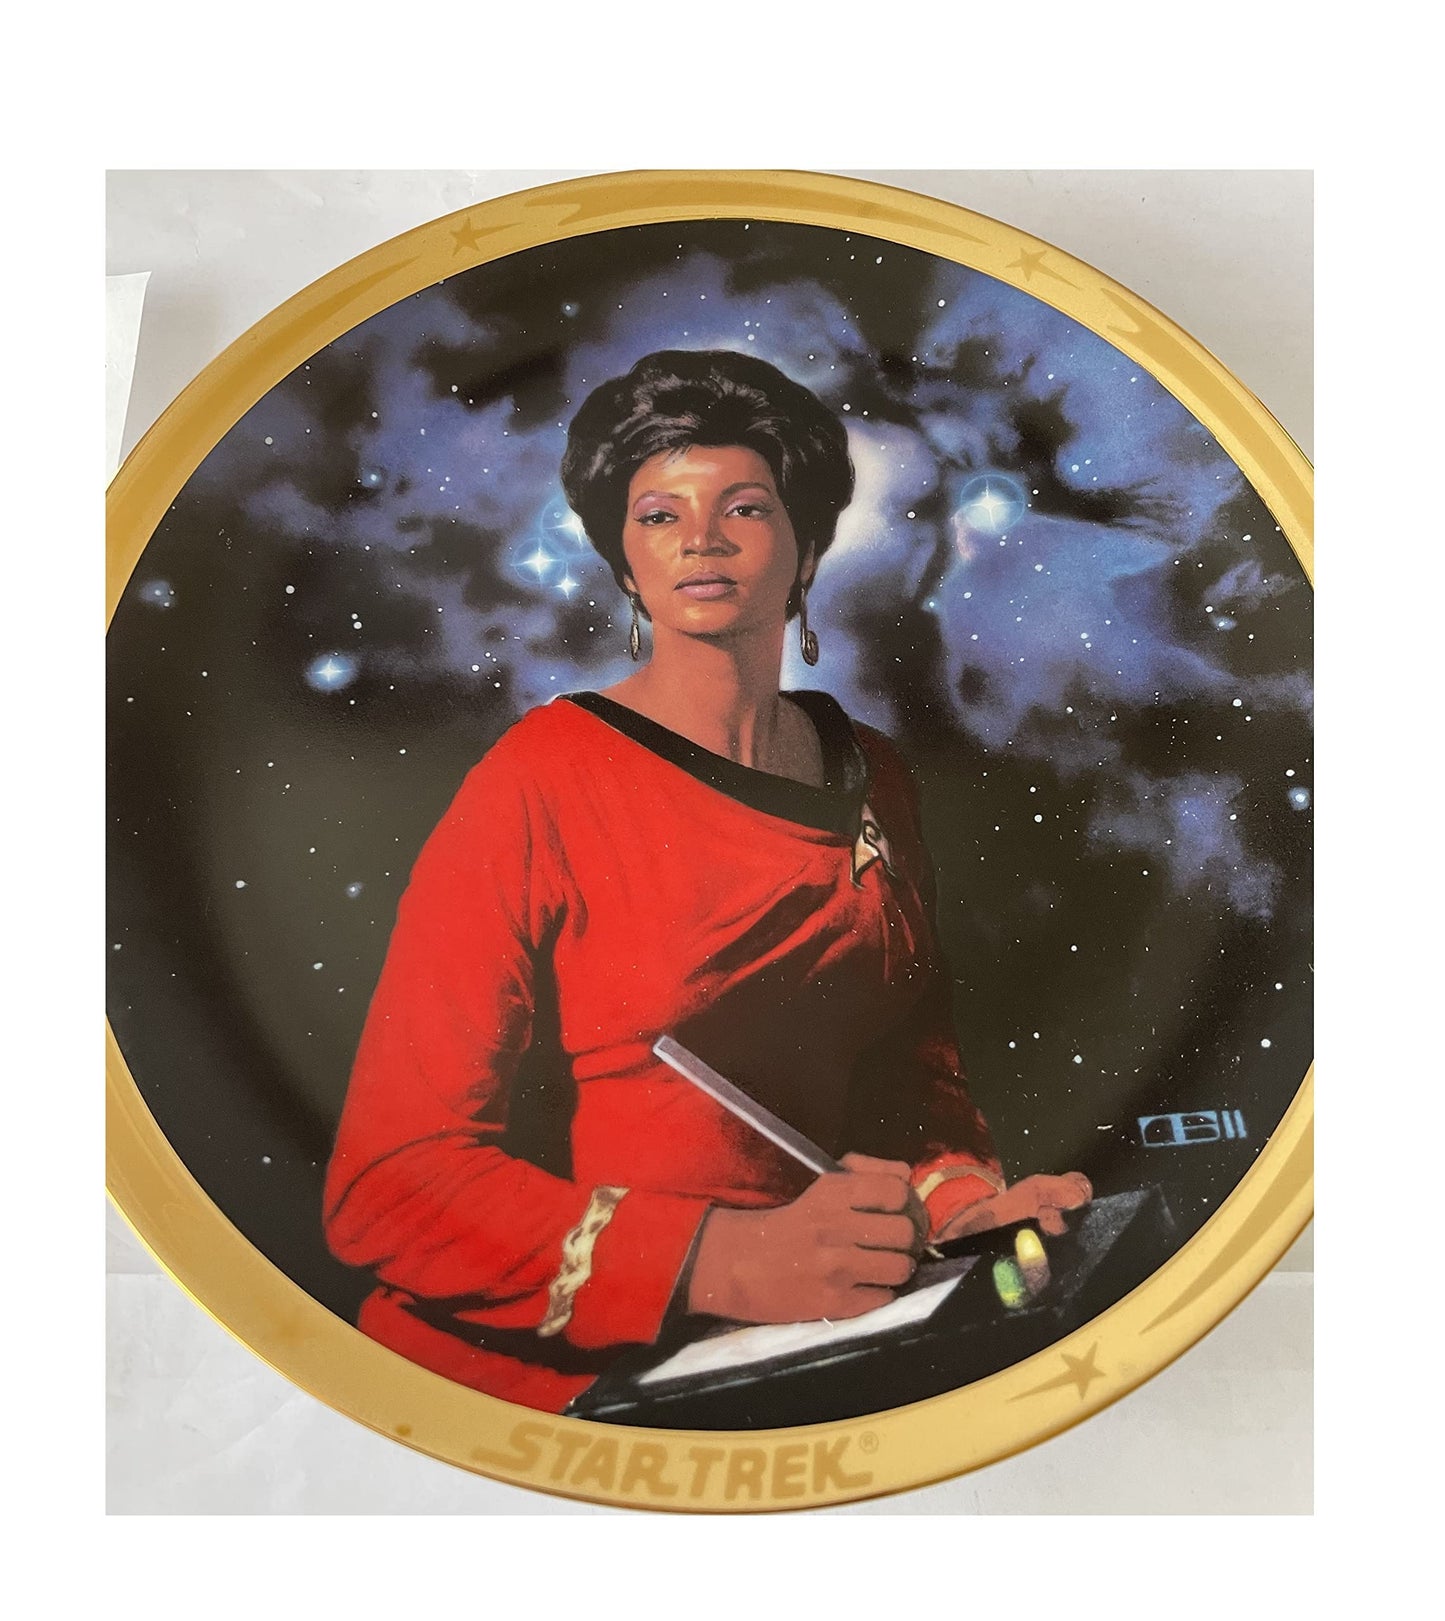 Vintage 1991 Star Trek The Original Series Uhura 25th Anniversary Commemorative Plate - Shop Stock Room Find